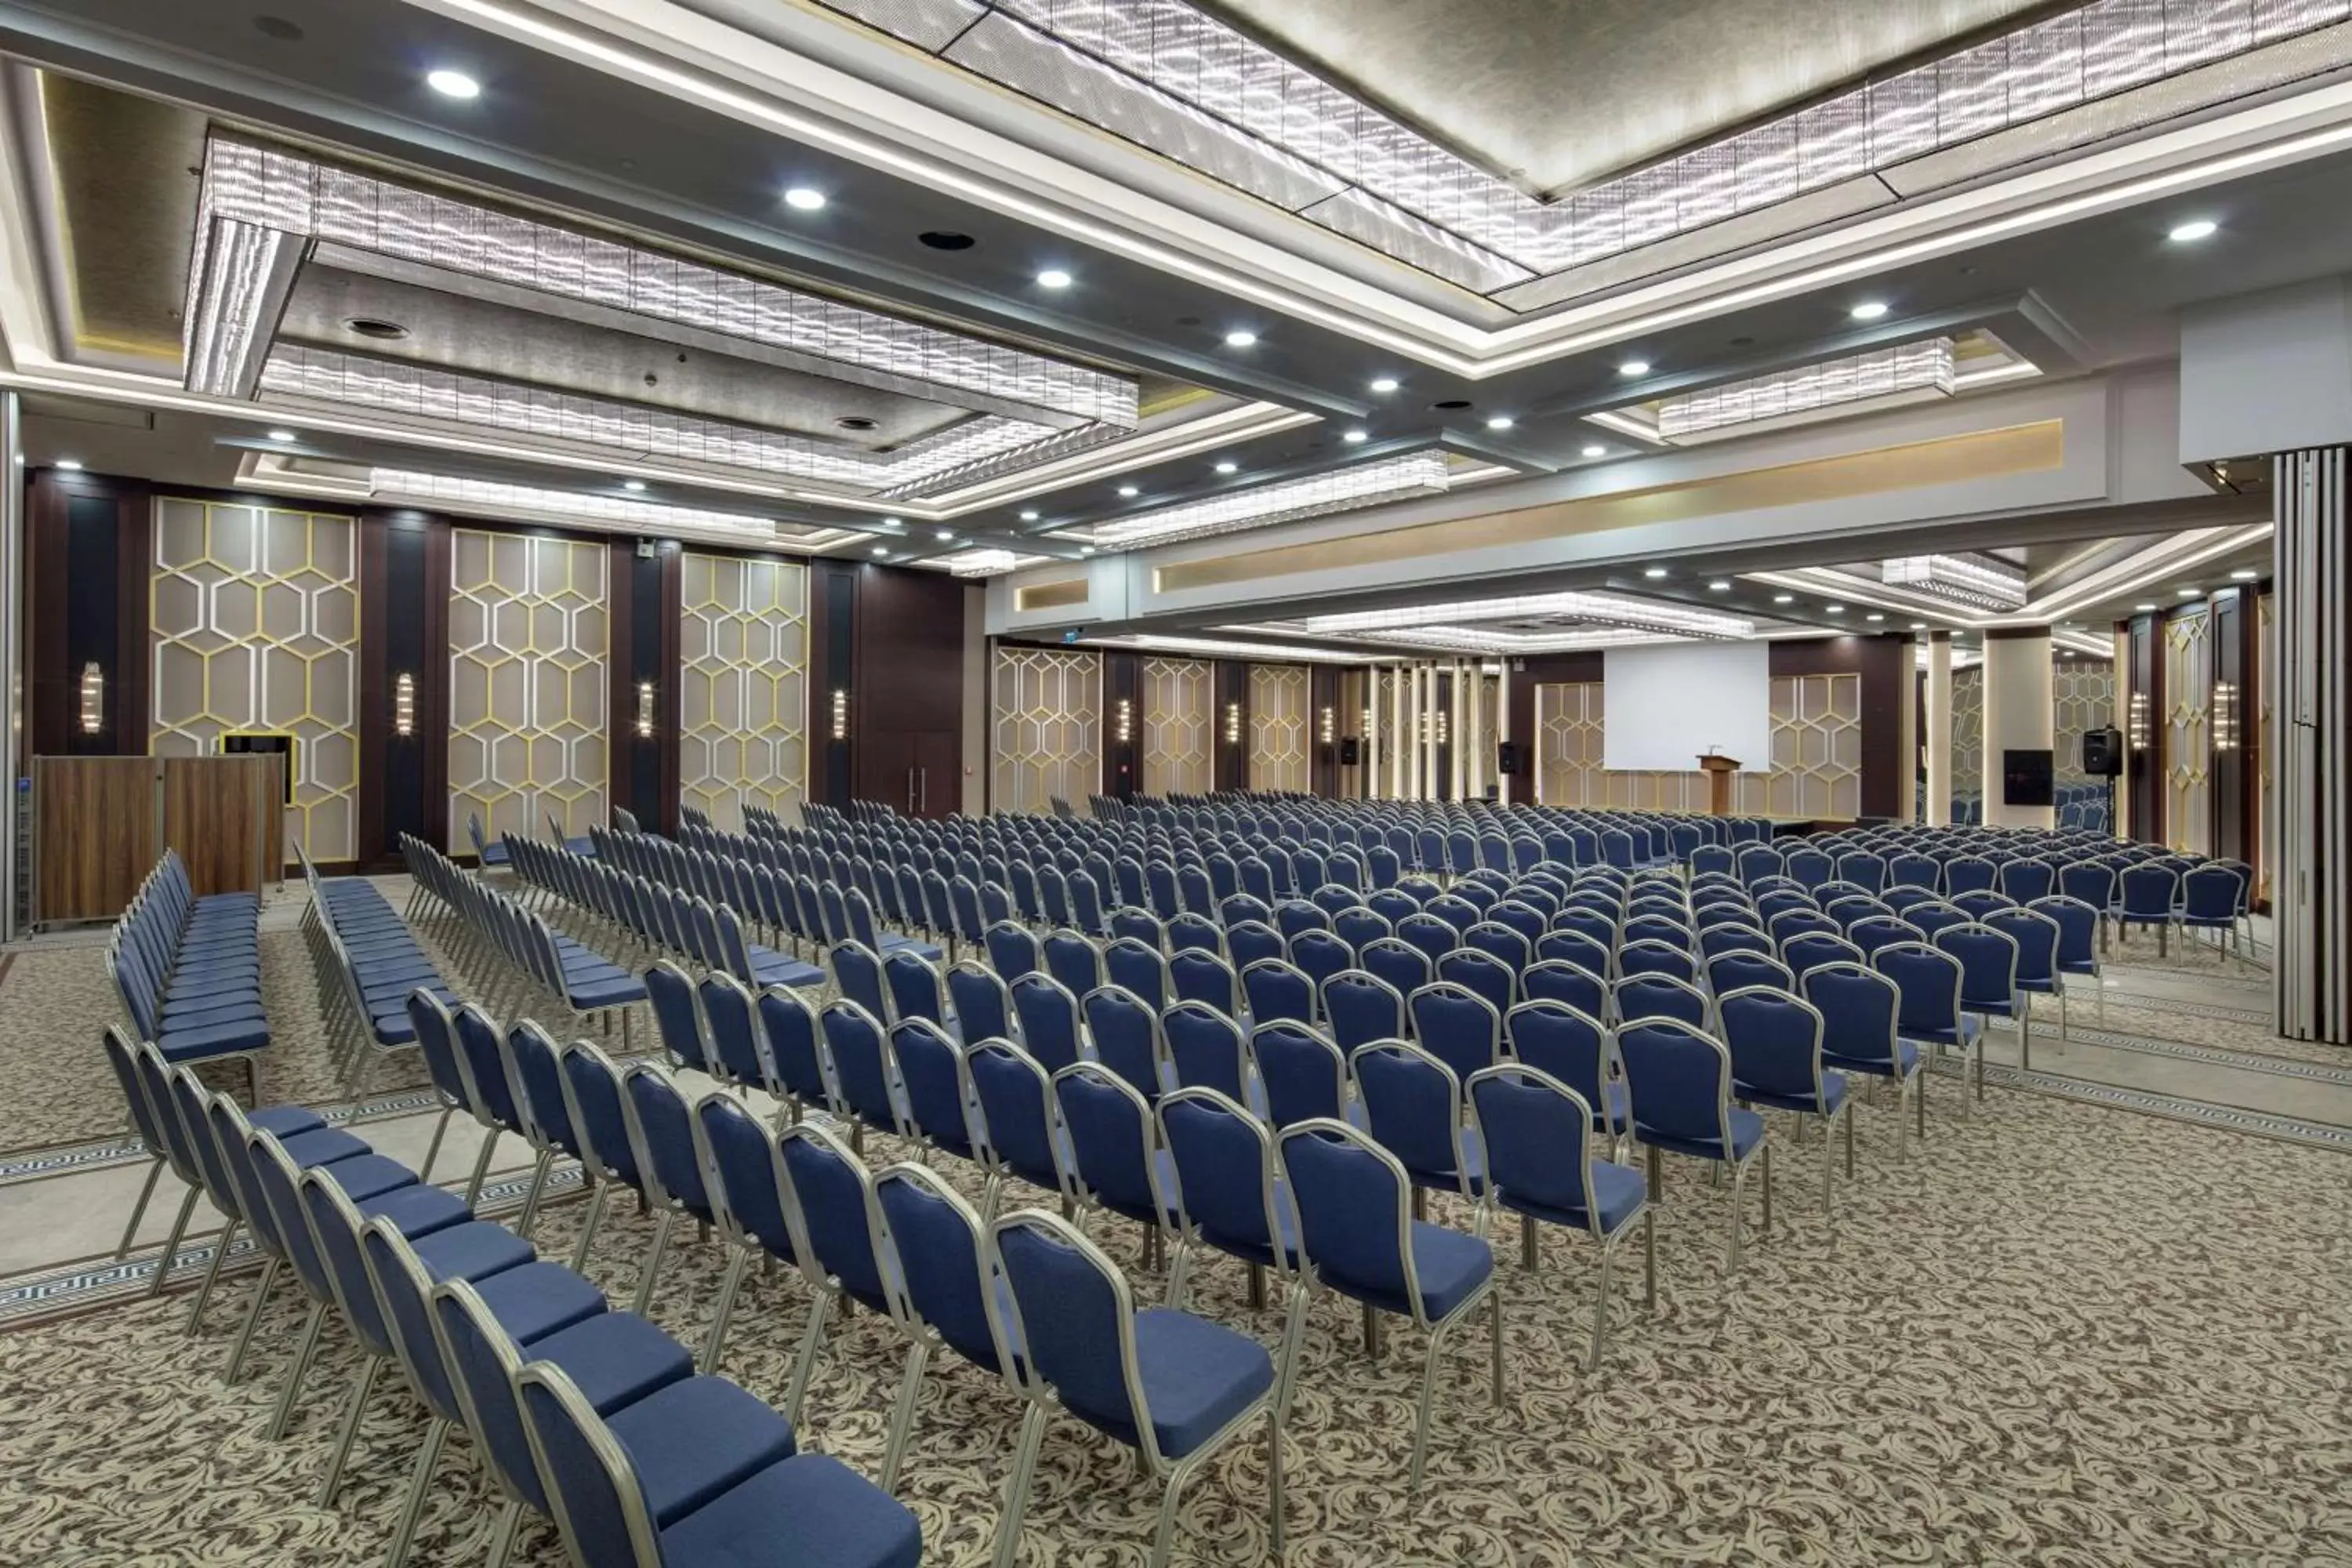 Meeting/conference room in Hilton Garden Inn Yalova